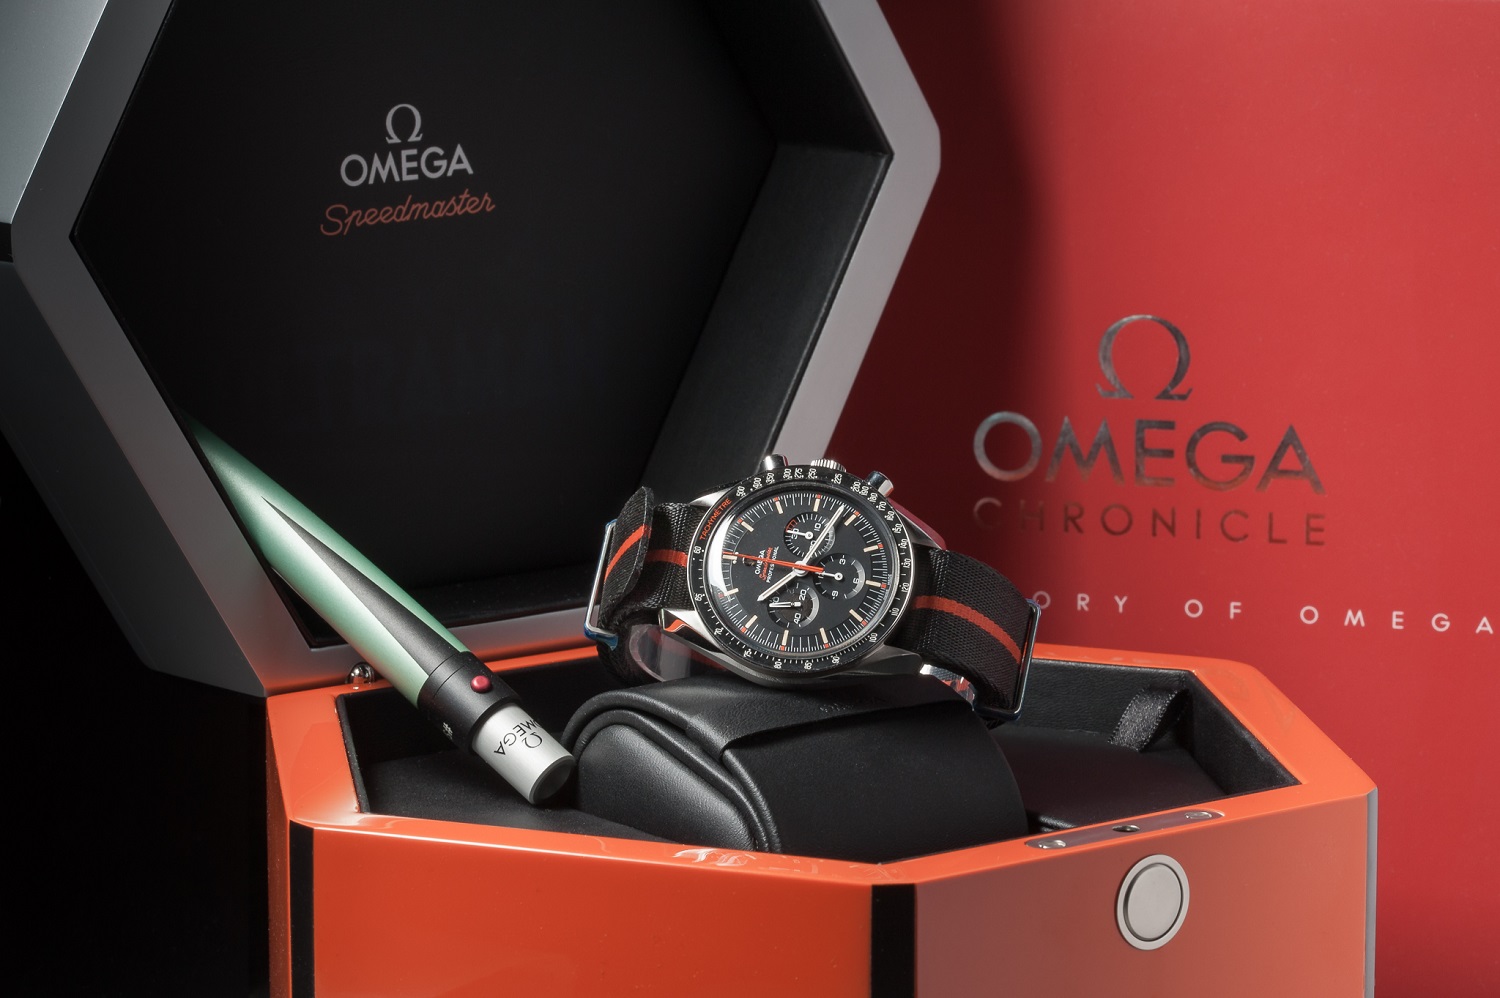 Omega Speedmaster Professional Moonwatch Speedy Tuesday